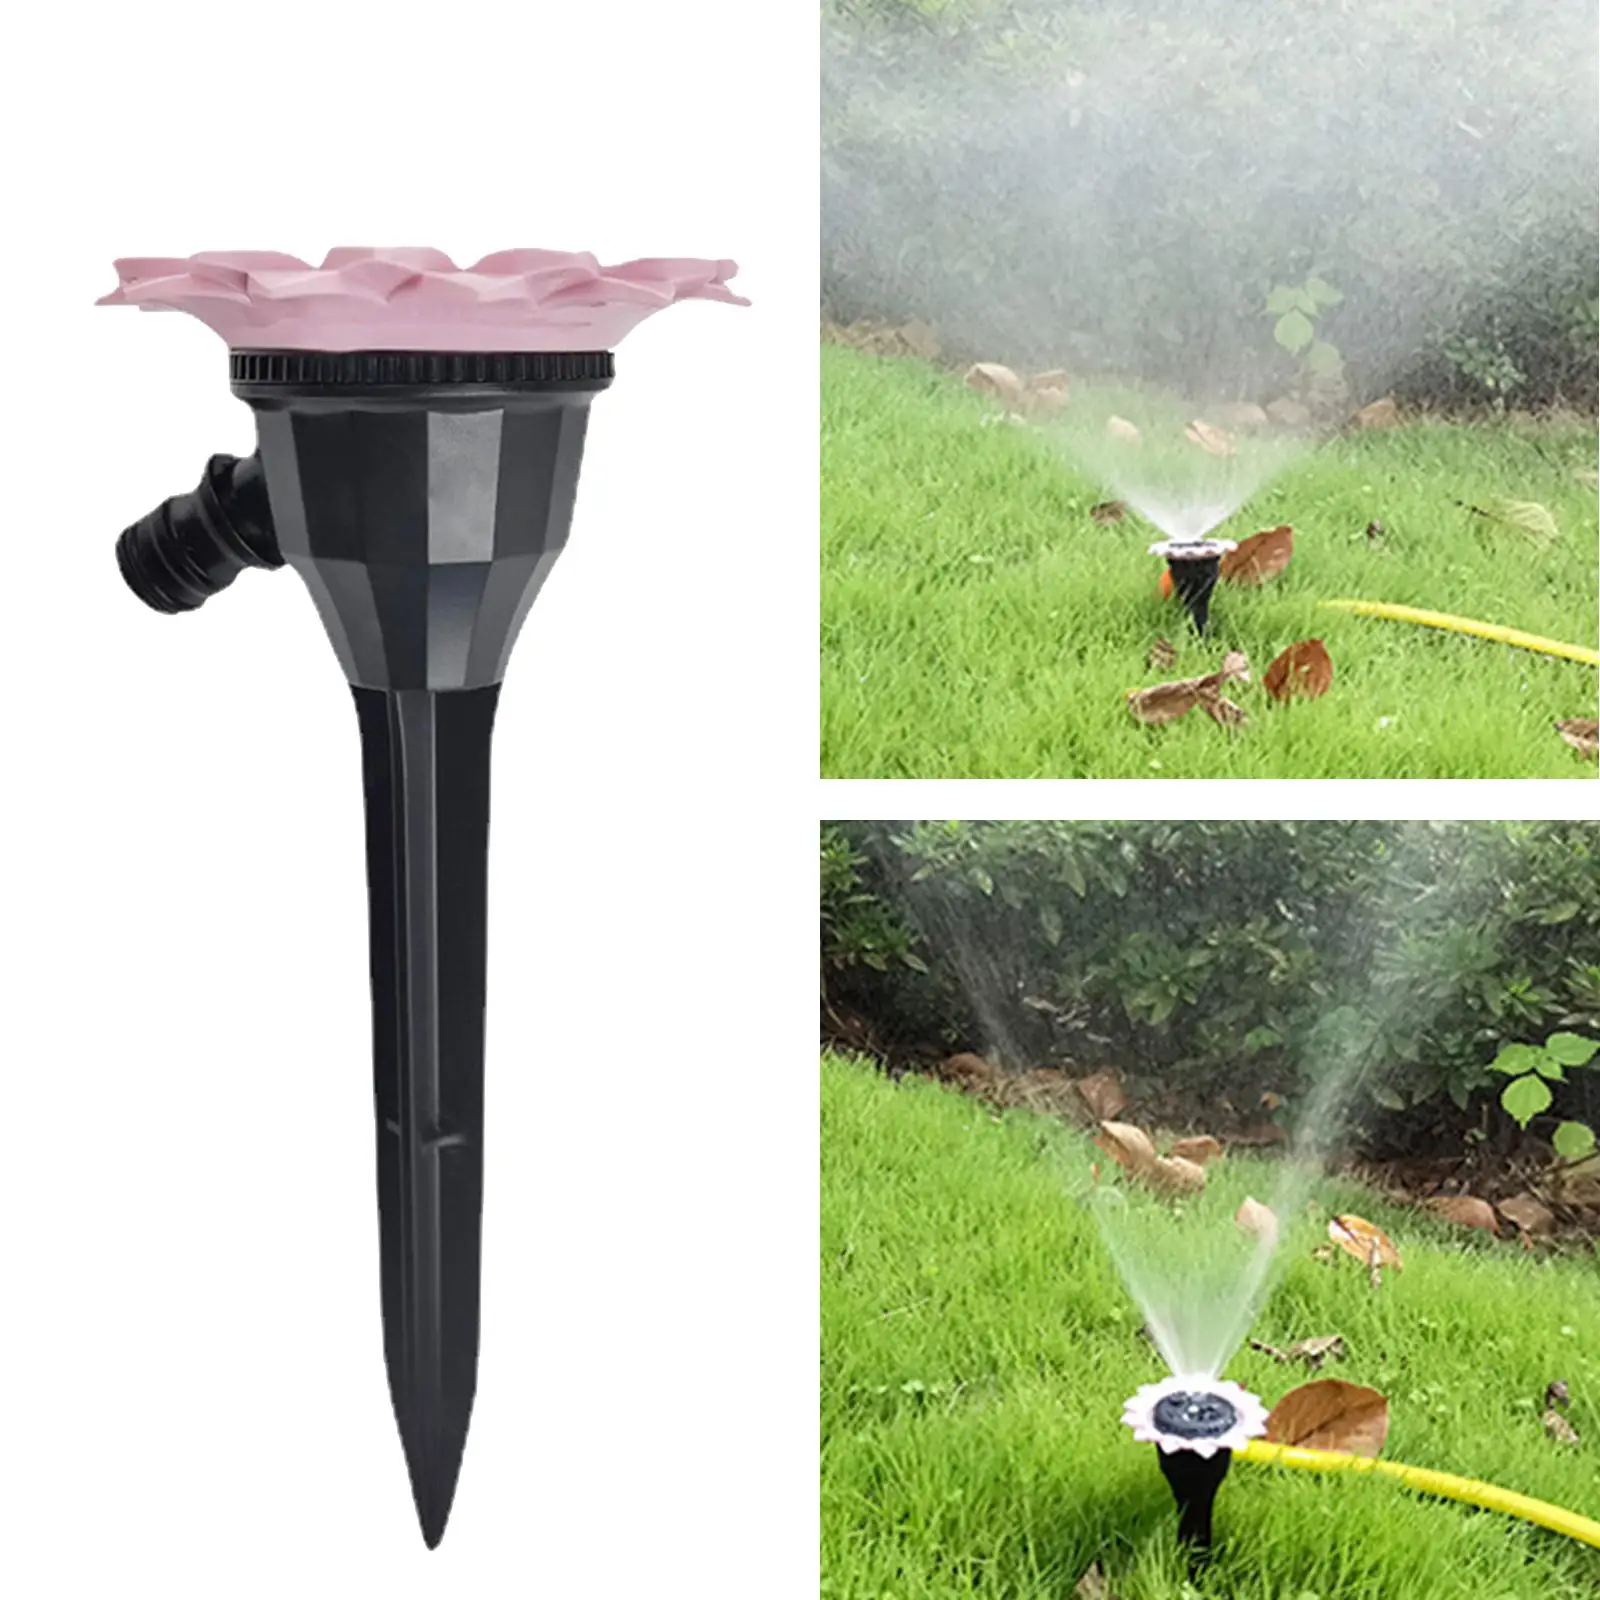 Lawn Sprinkler Multifunctional Garden Watering Tool for Car Backyard Outdoor